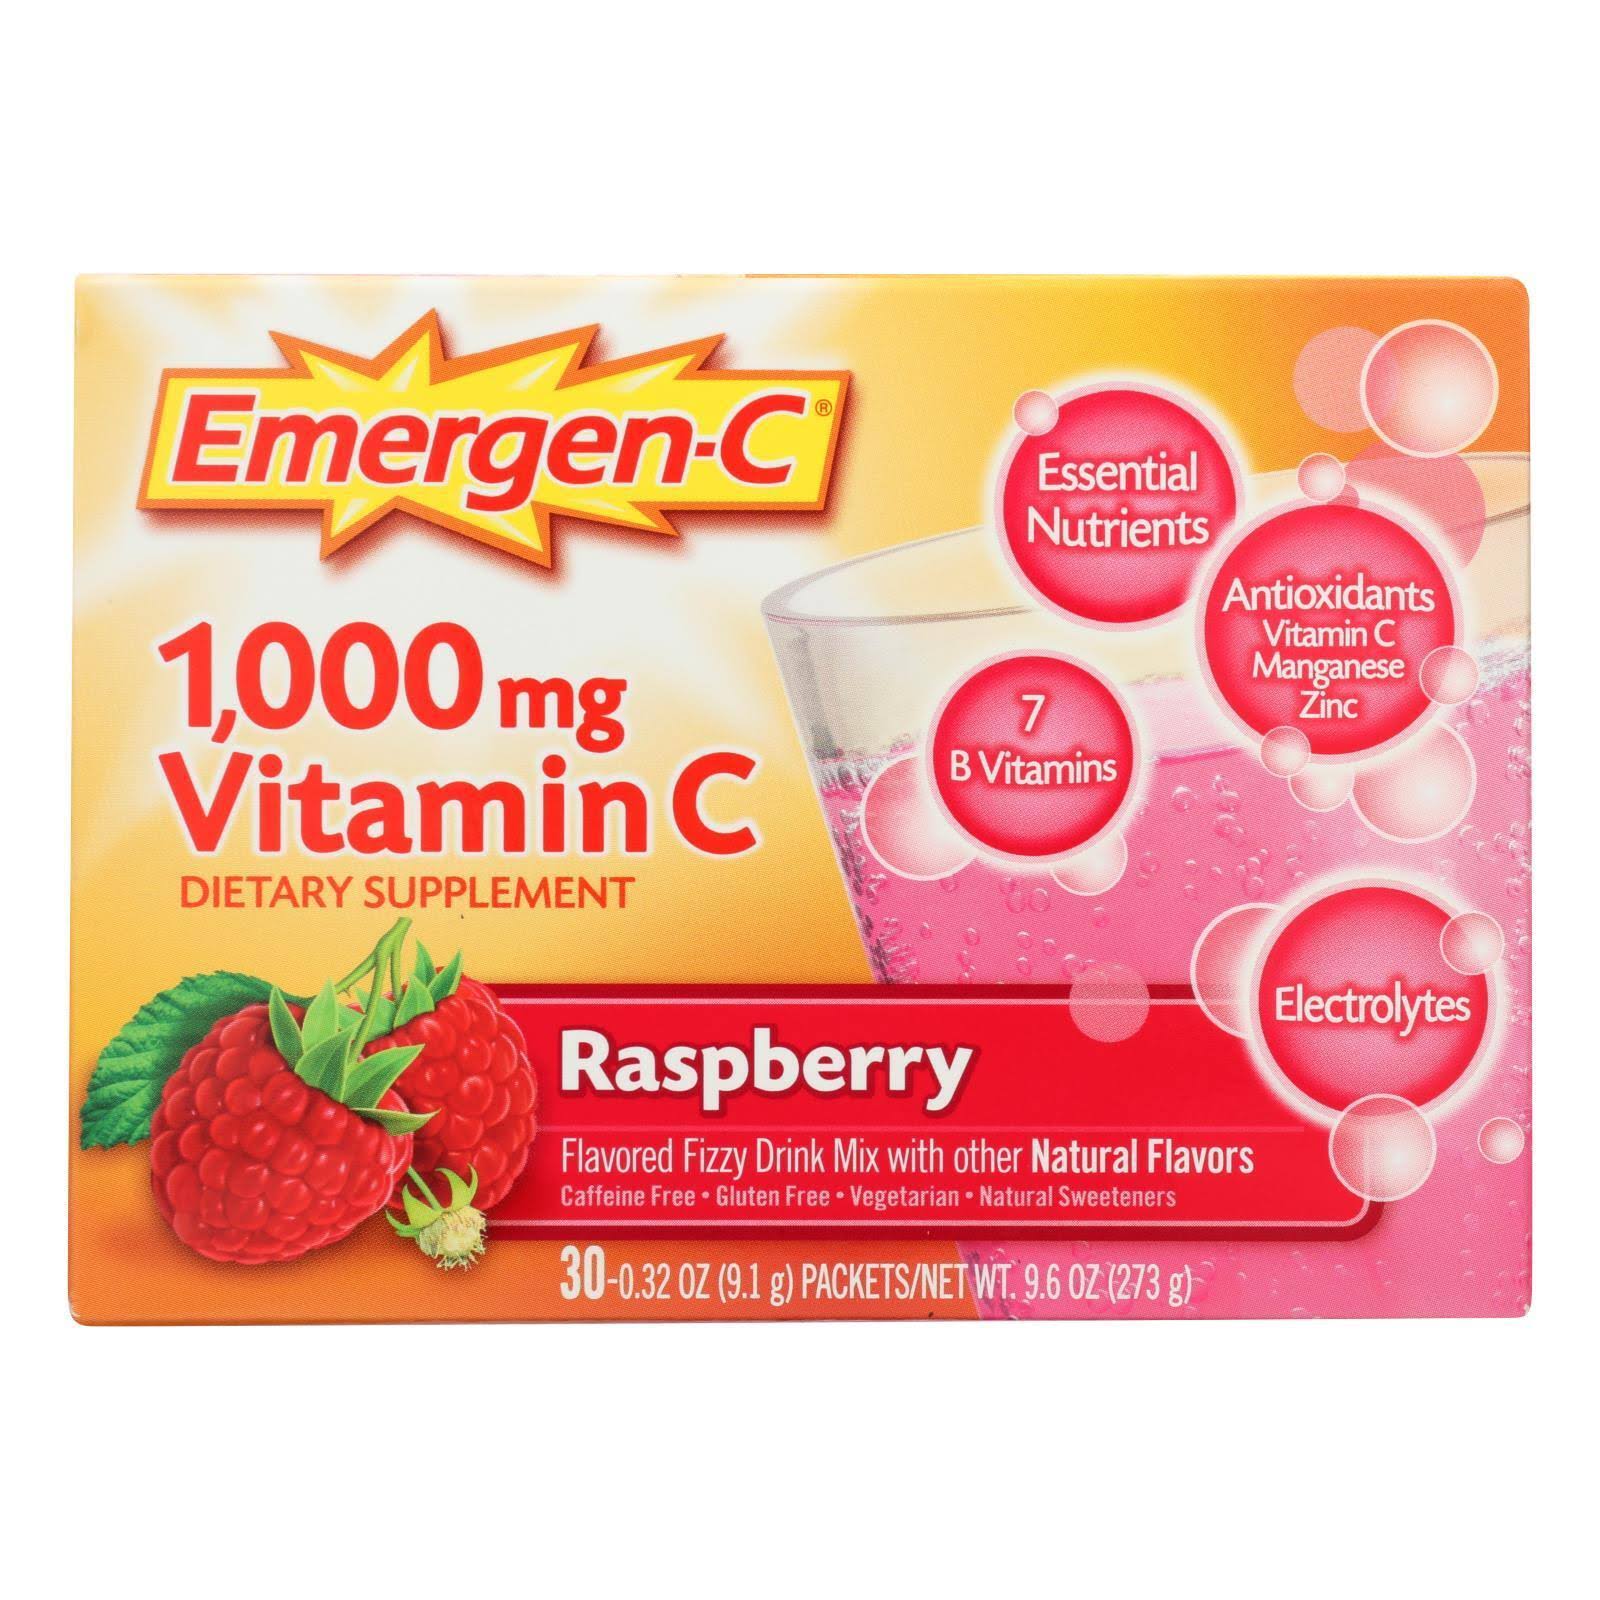 Emergen-C Flavored Fizzy Drink Mix Vitamin C - Raspberry, 30pk, 1000mg